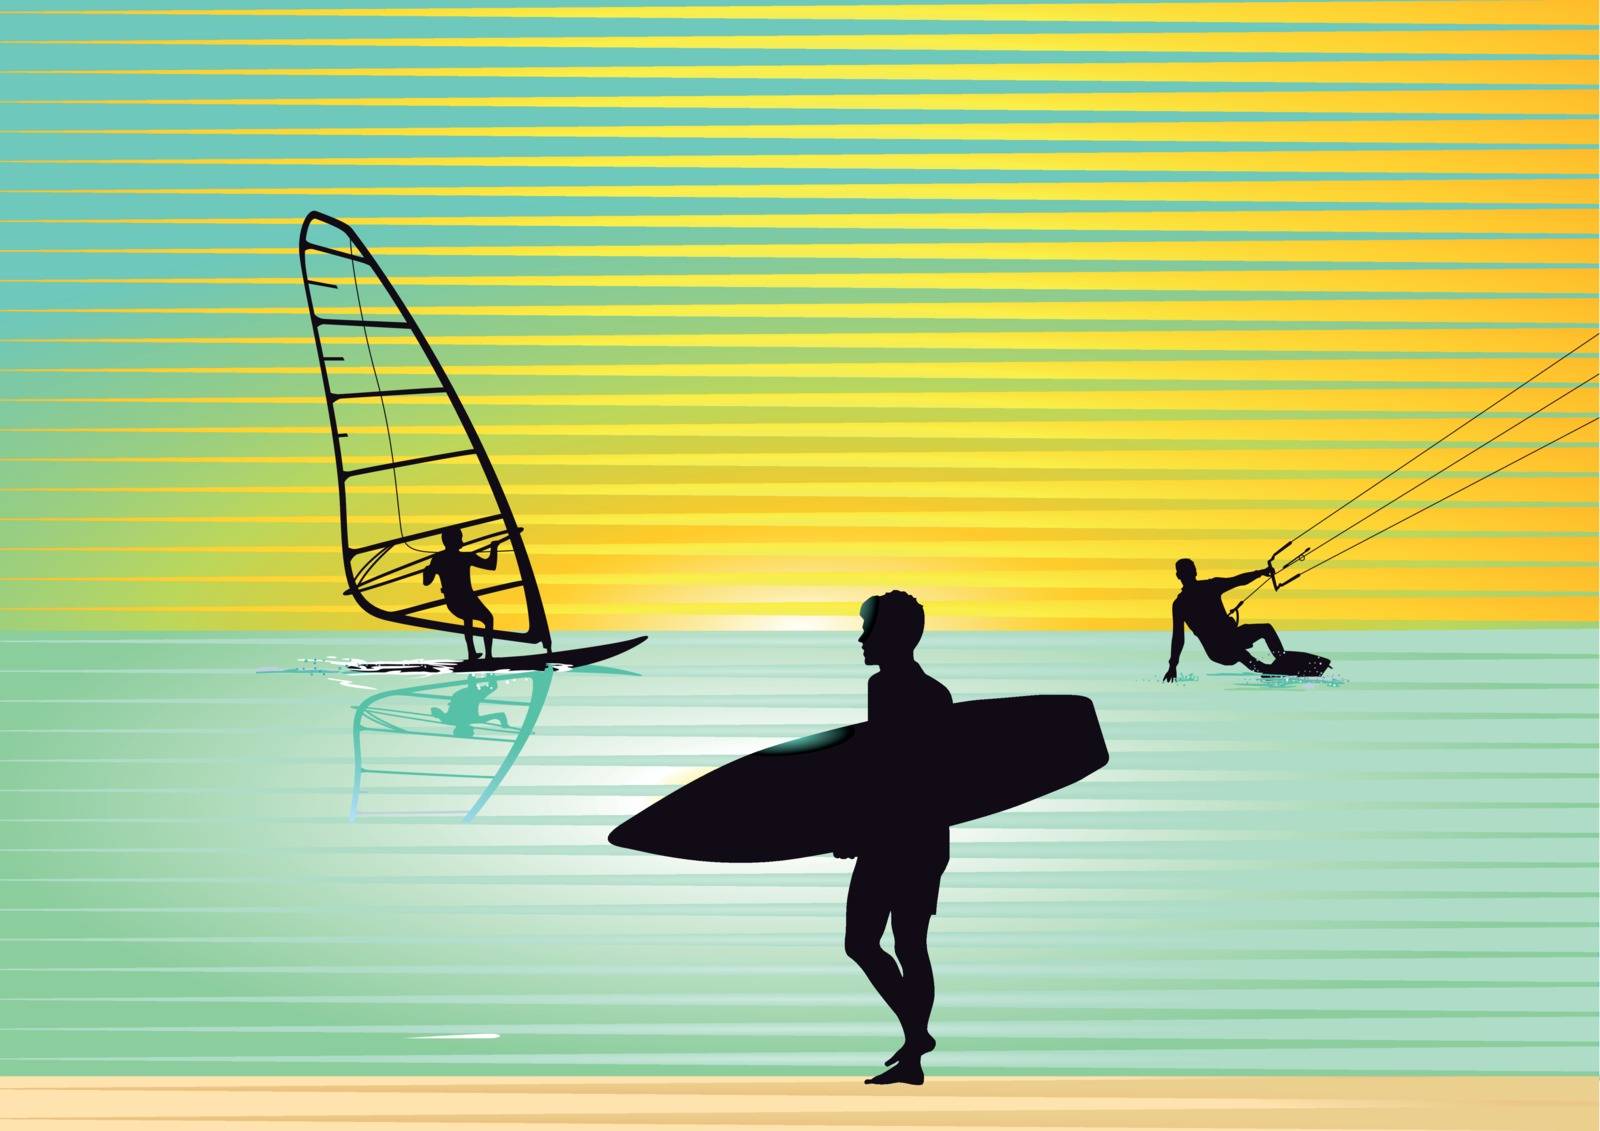 Surf Illustration by scusi